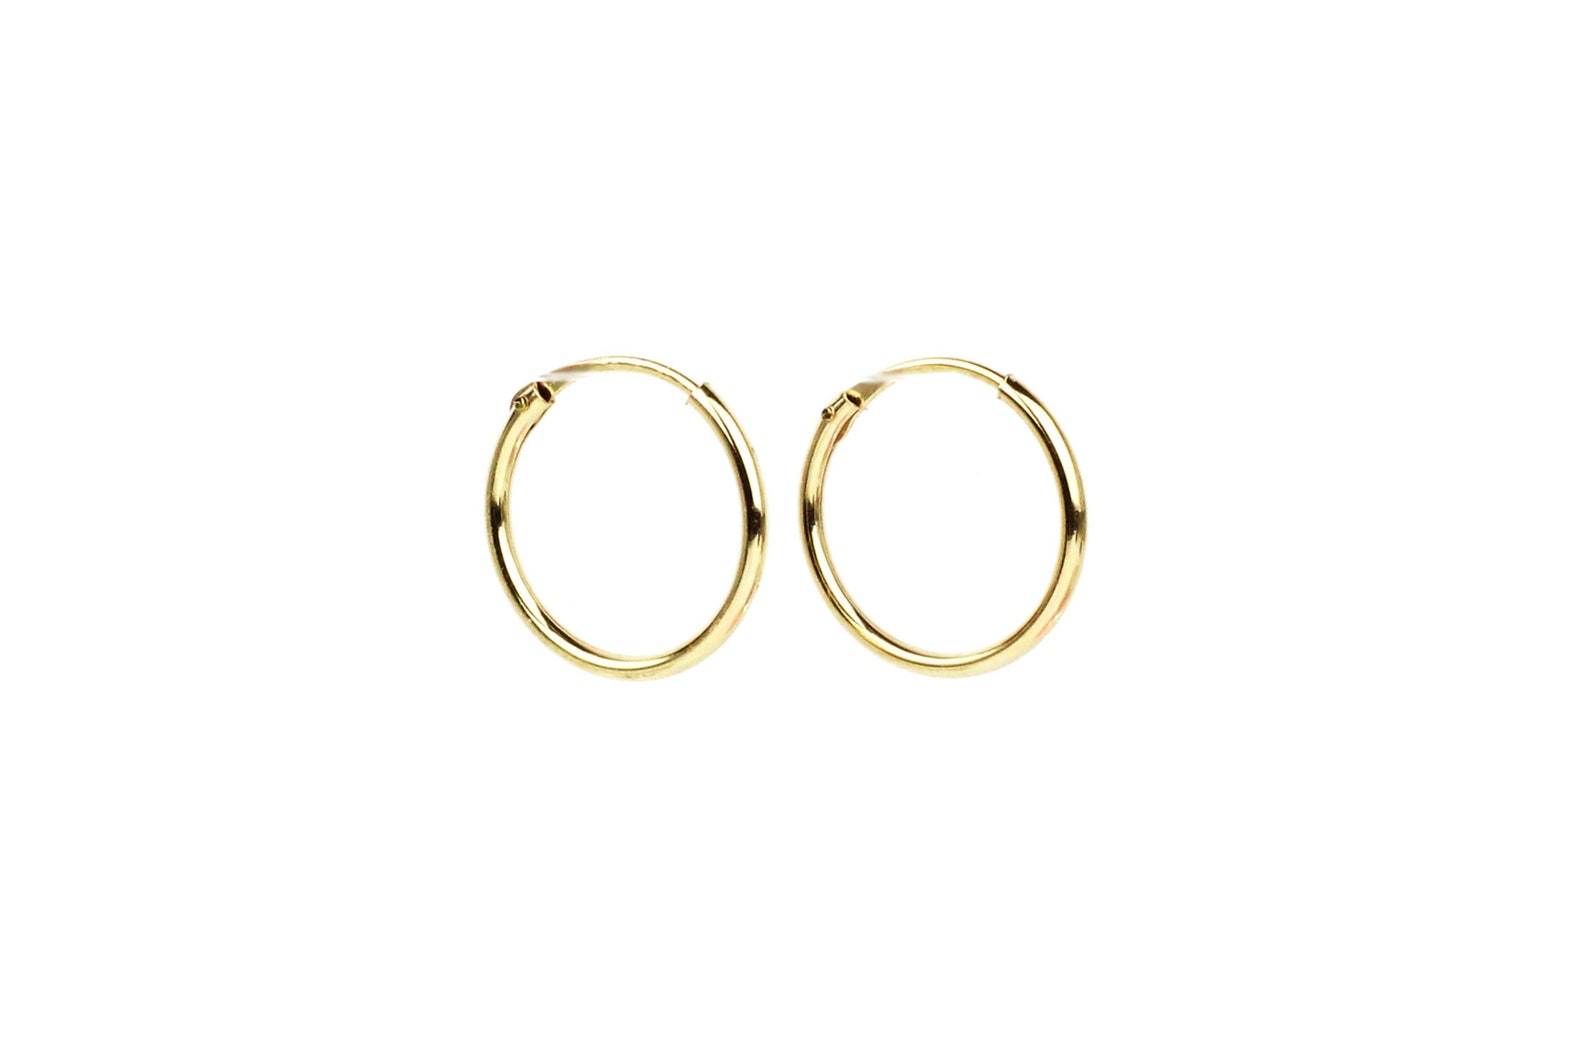 Small Solid Gold Hoops 11mm Hoops Yellow Gold Hoop Earrings - Etsy UK